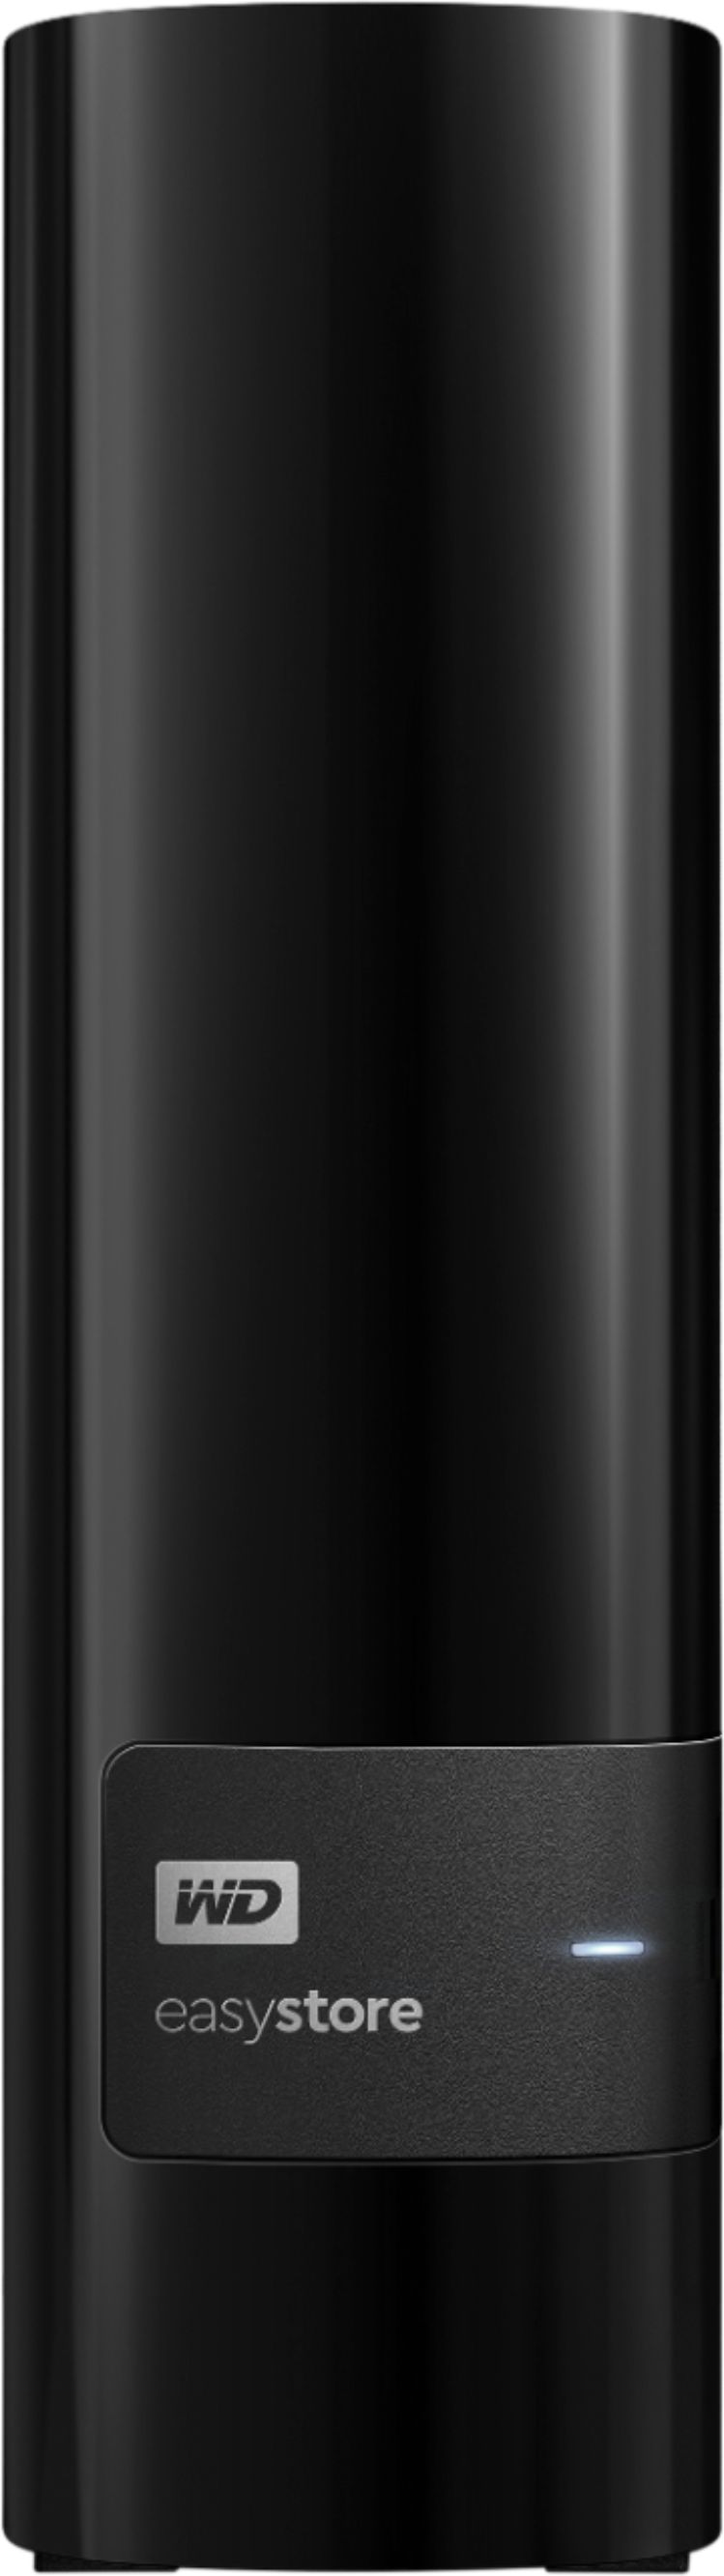 Black Easystore 8TB External USB 3.0 Hard Drive WD 